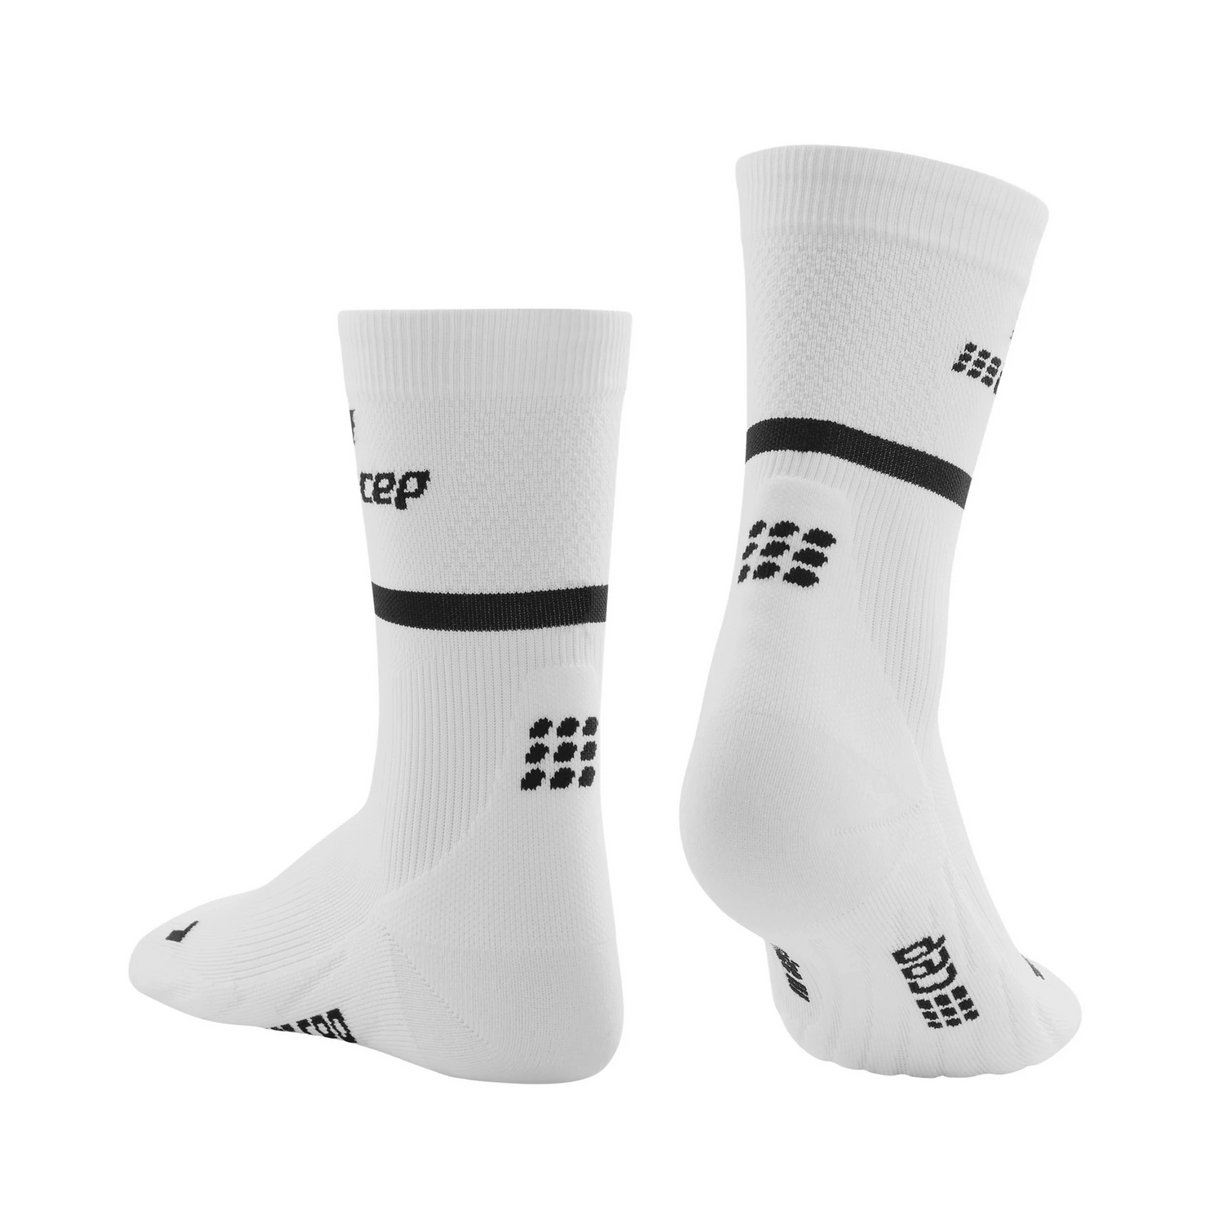 CEP Women's Mid Cut Compression Socks 4.0